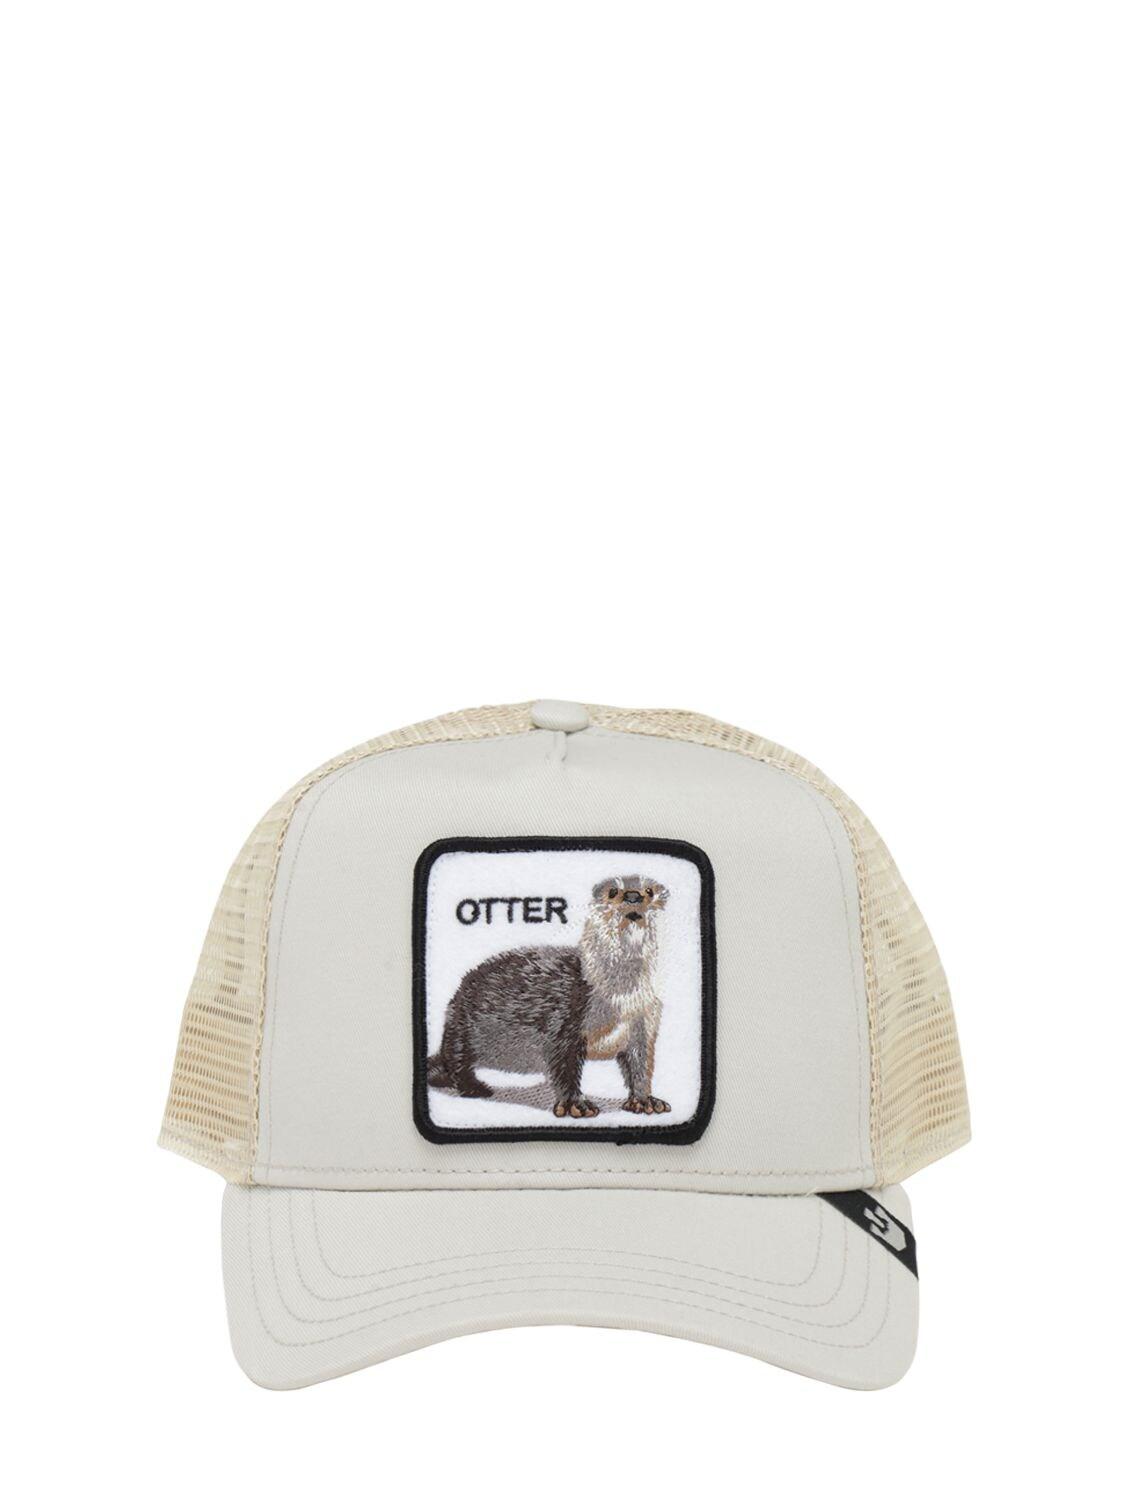 Goorin Bros Otter Patch Trucker Hat in Natural for Men | Lyst